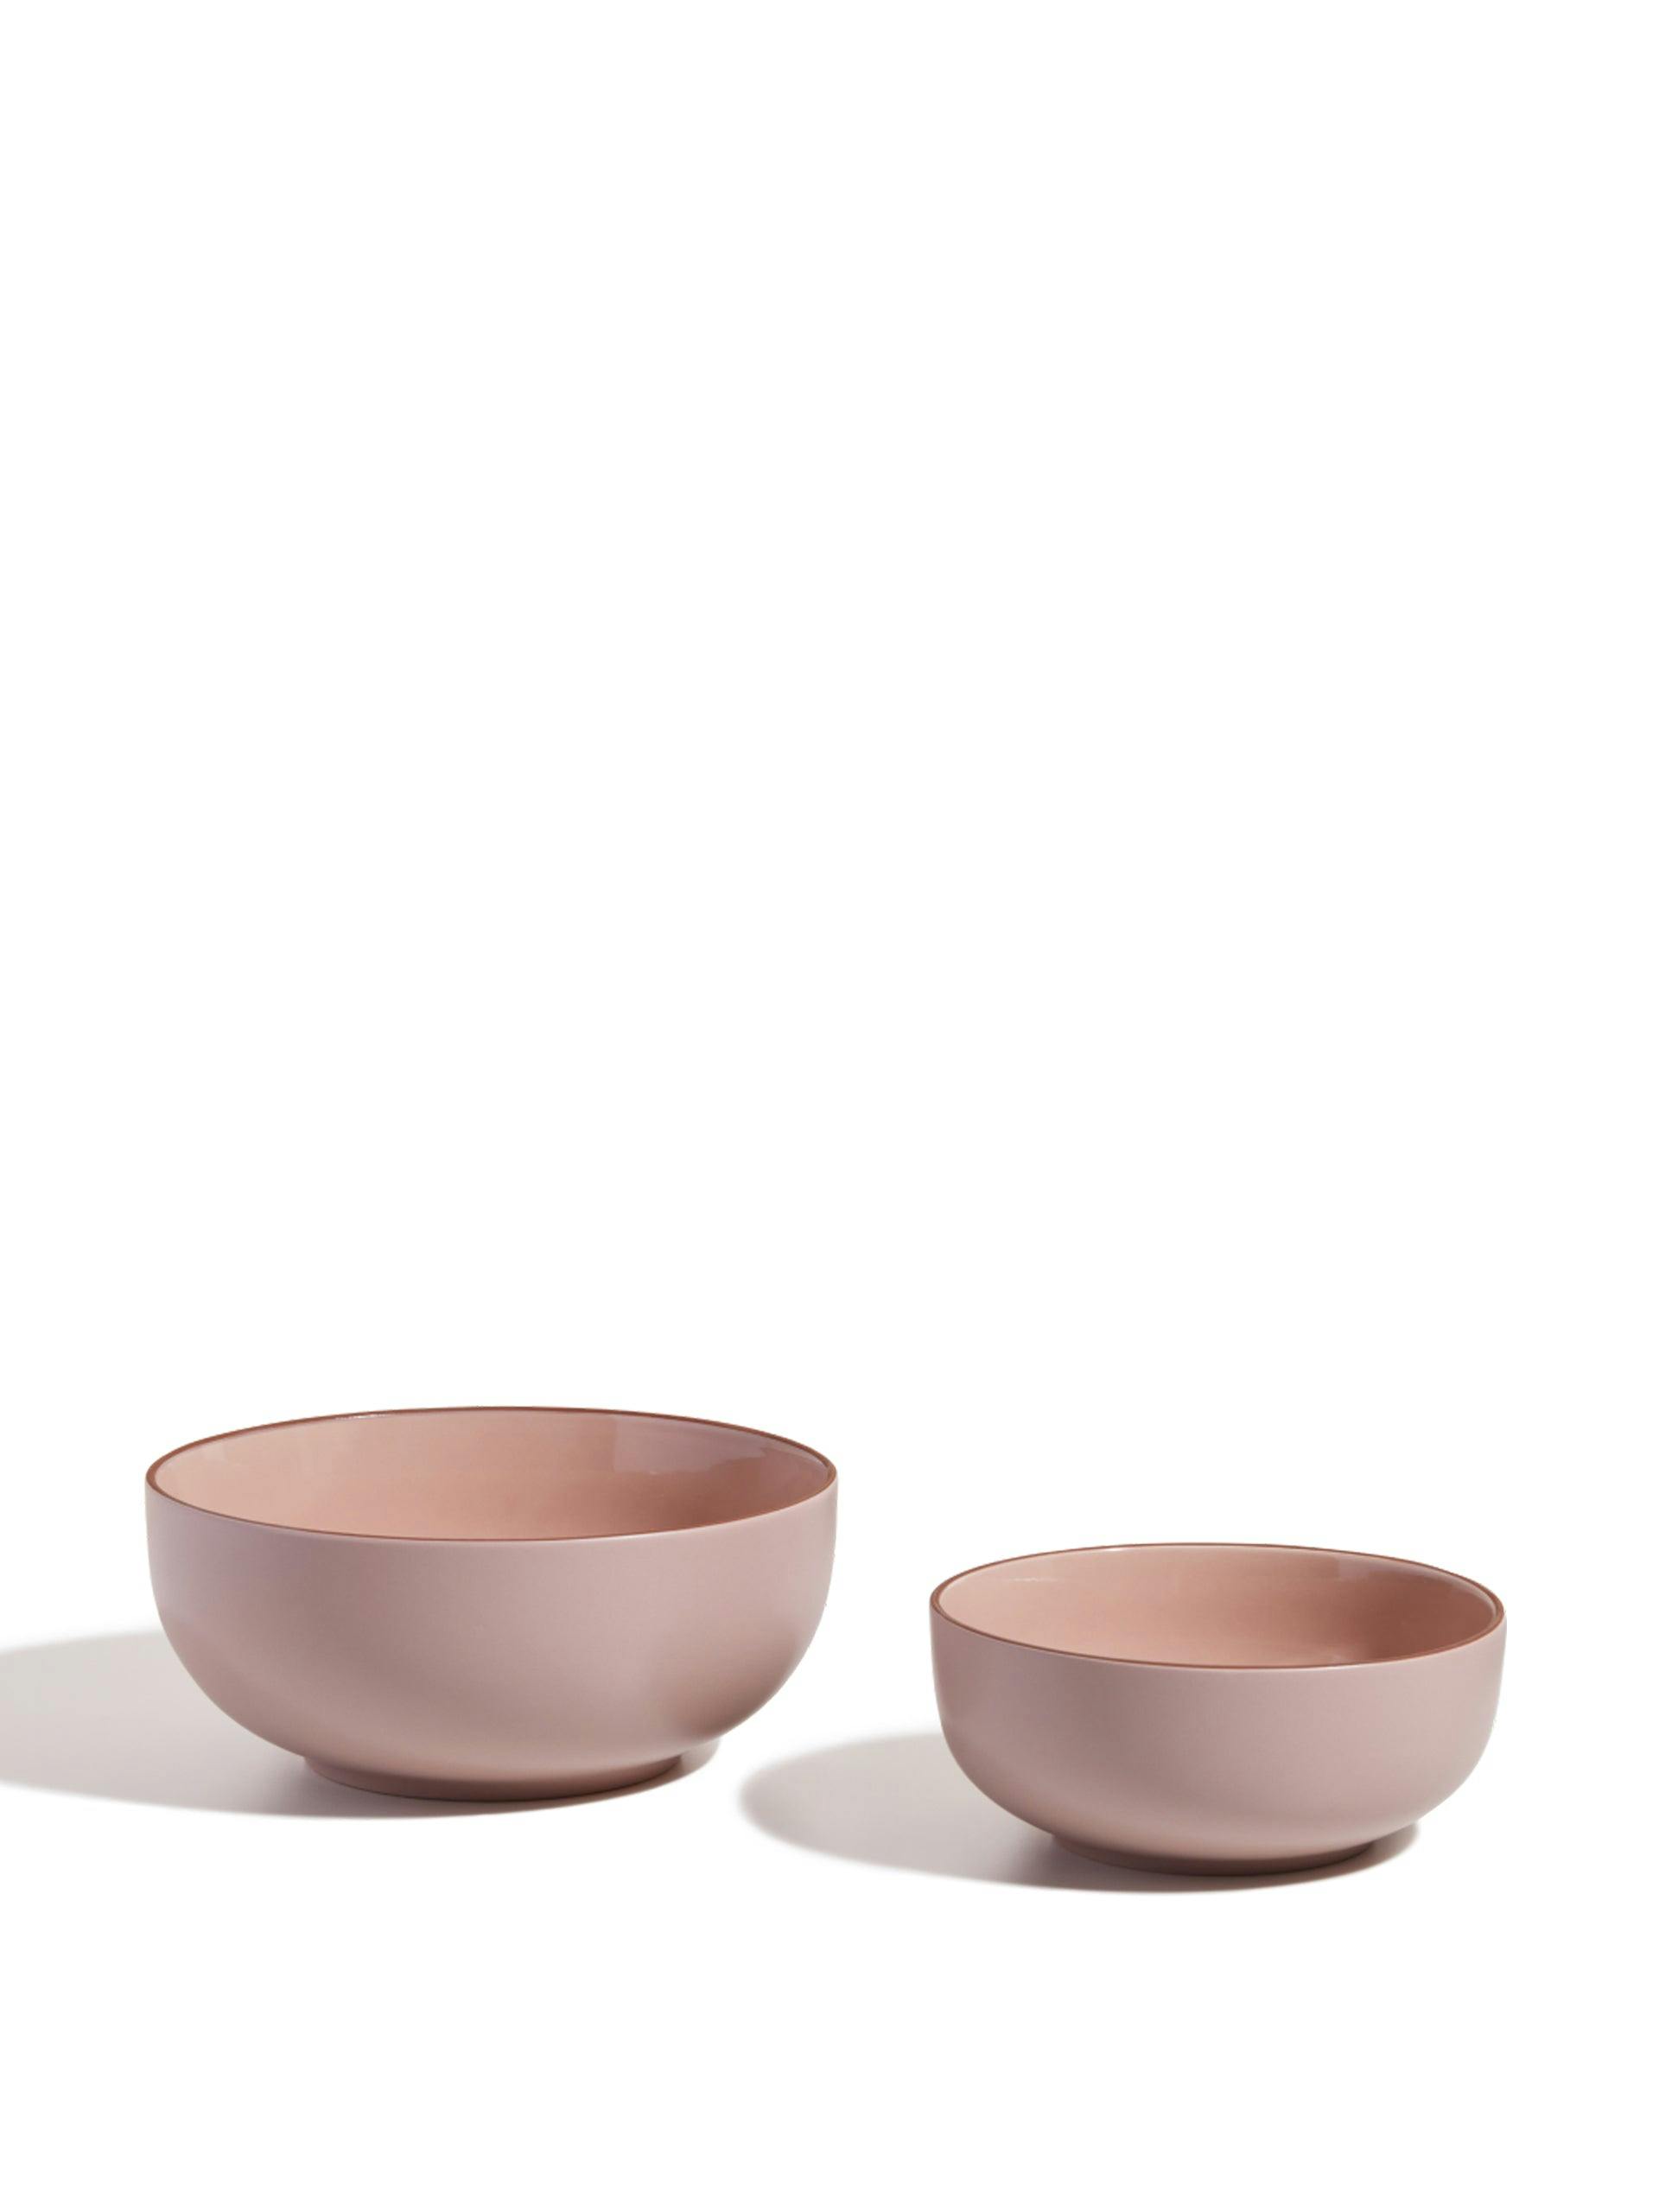 Ceramic gather bowls in warm, dusky pink